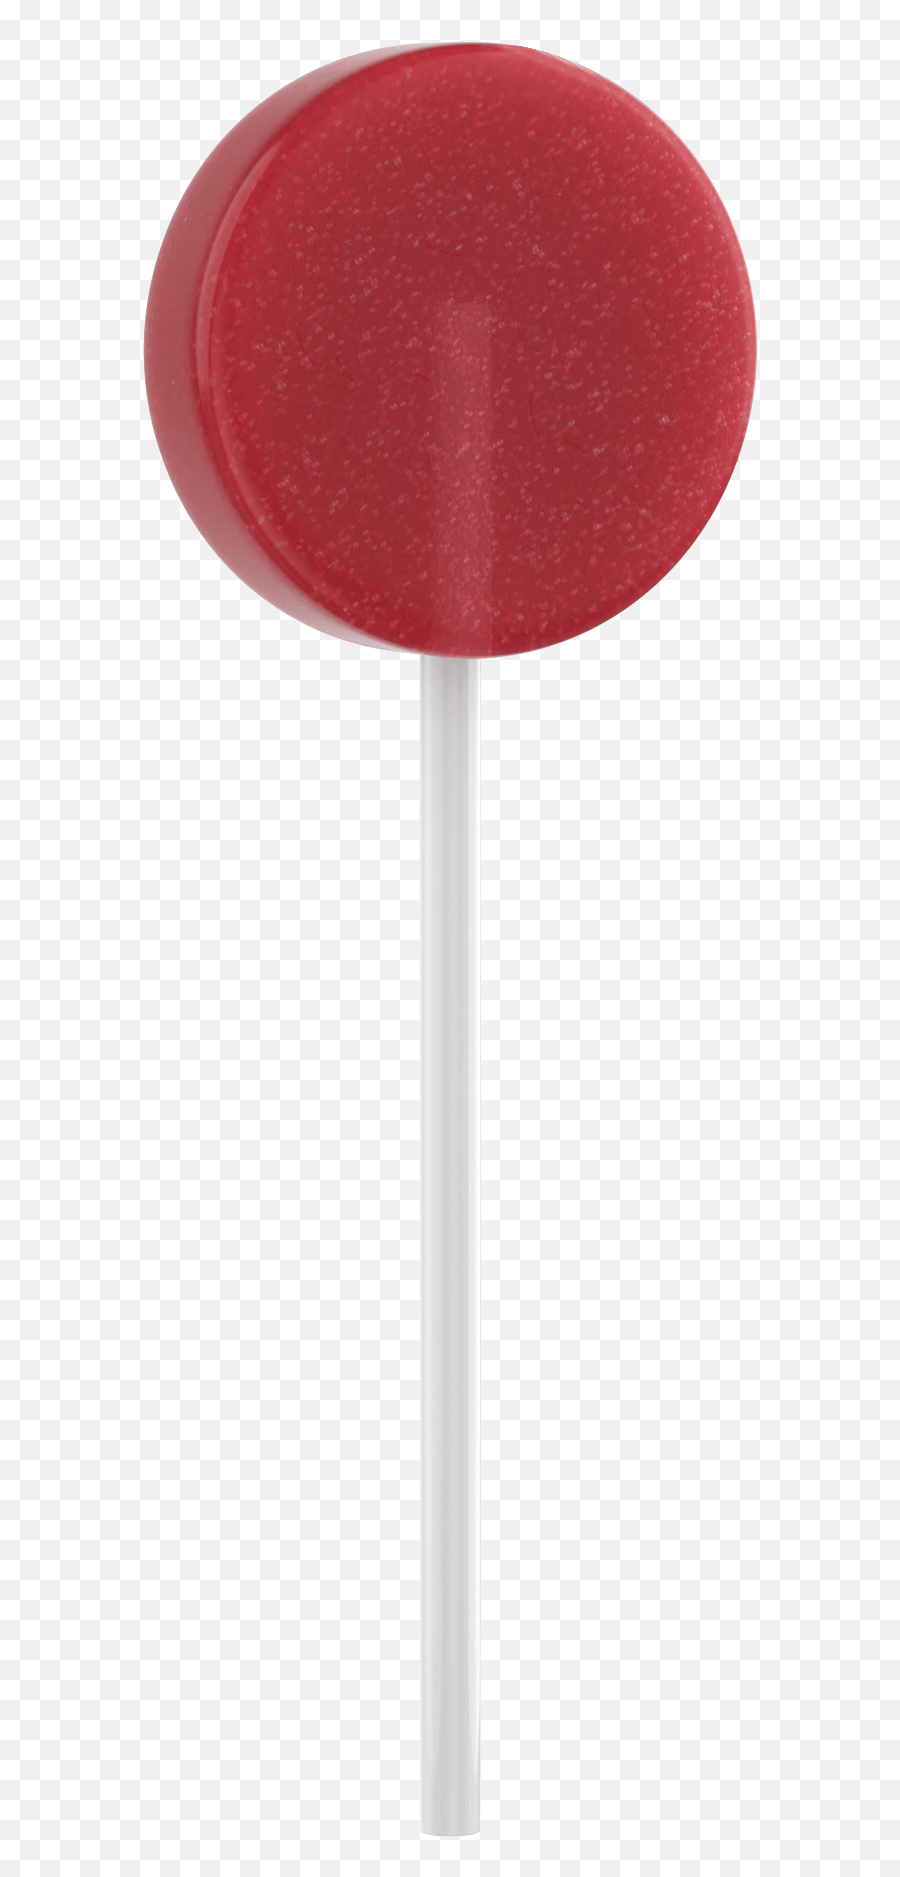 Delta 8 Thc Lollipops Buy Delta 8 Lollipops Online U2013 Binoid Emoji,What Does The V Emoji Mean